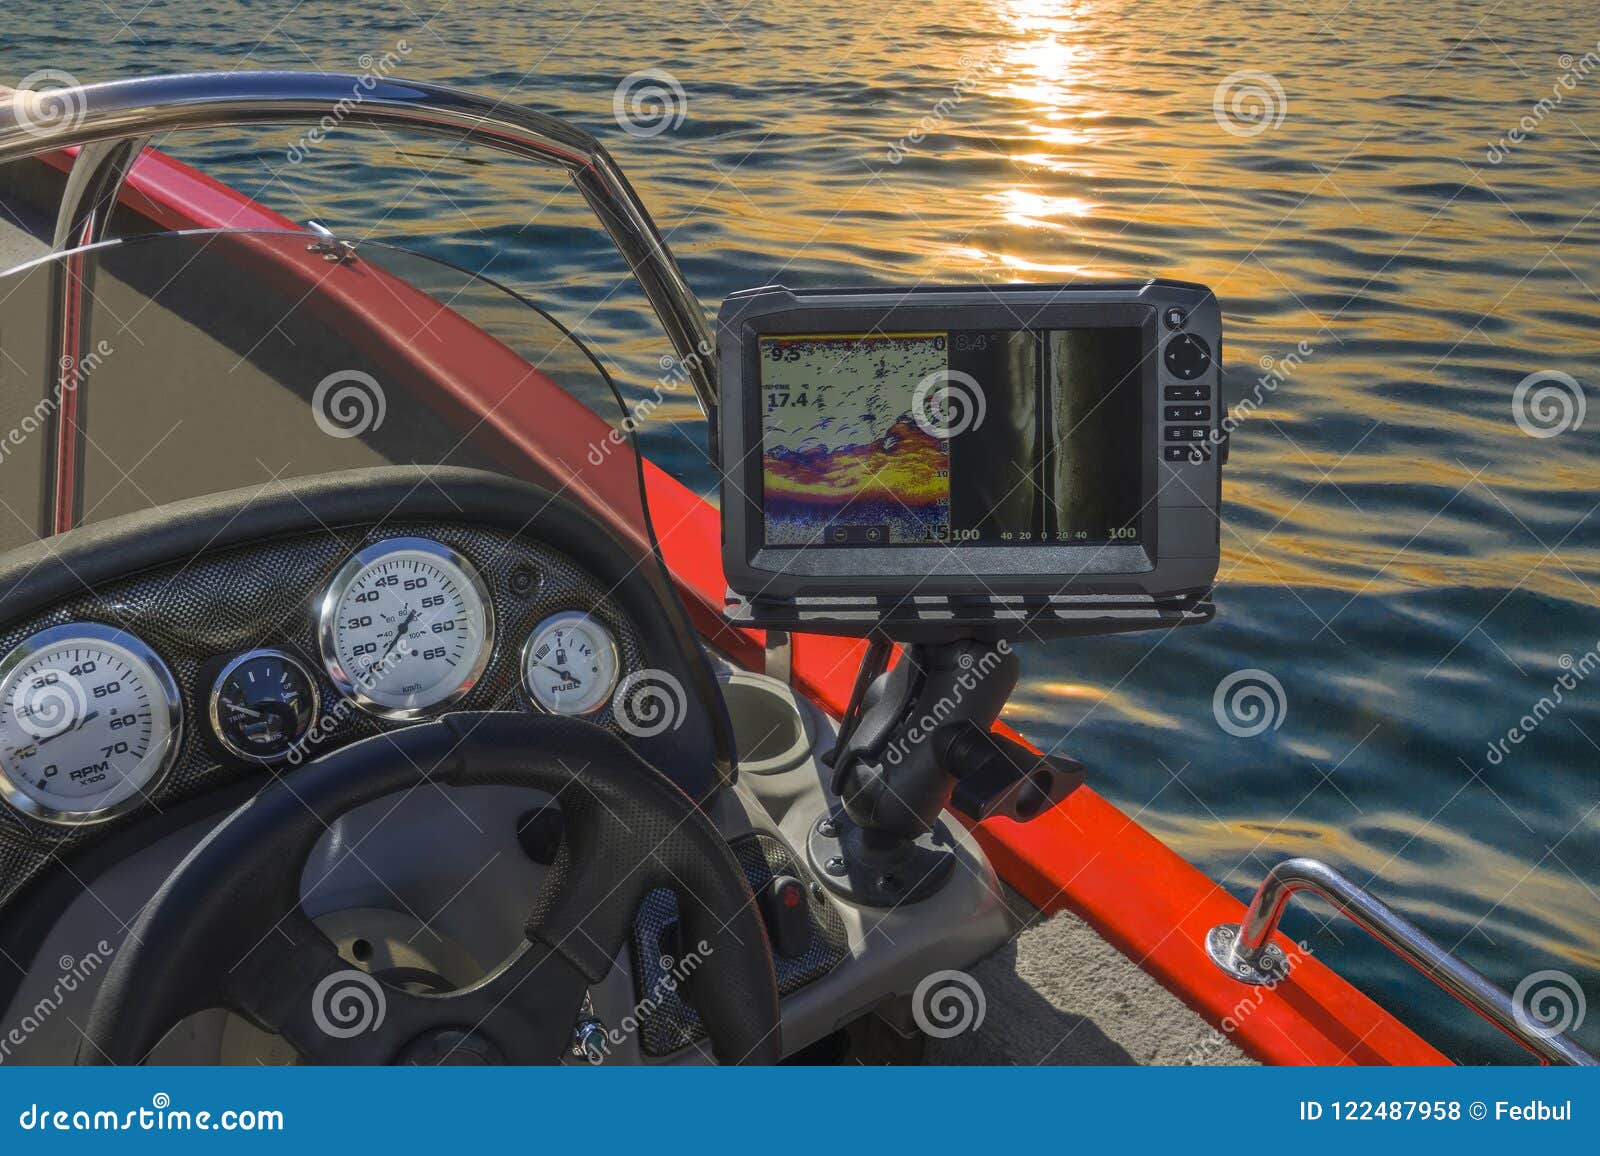 fishfinder, echolot, fishing sonar at the boat